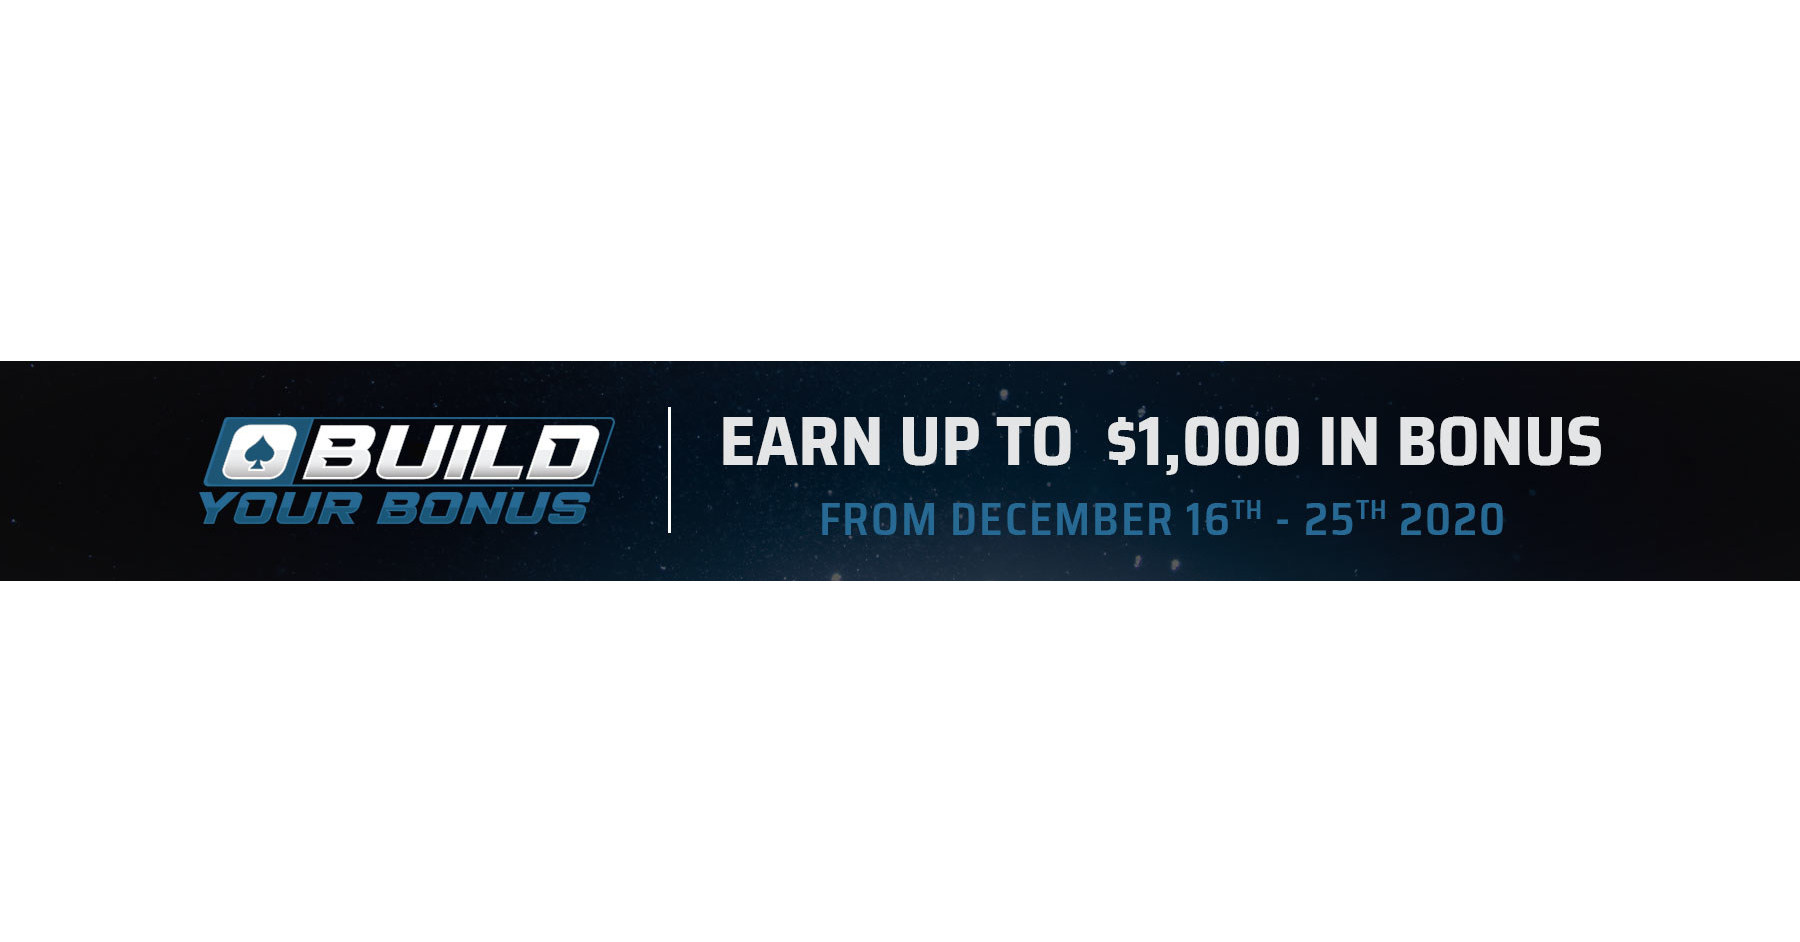 Americas Cardroom Mengundang Pemain Poker untuk 'Membangun Bonus Anda' hingga $ 1.000 Bonus Tunai